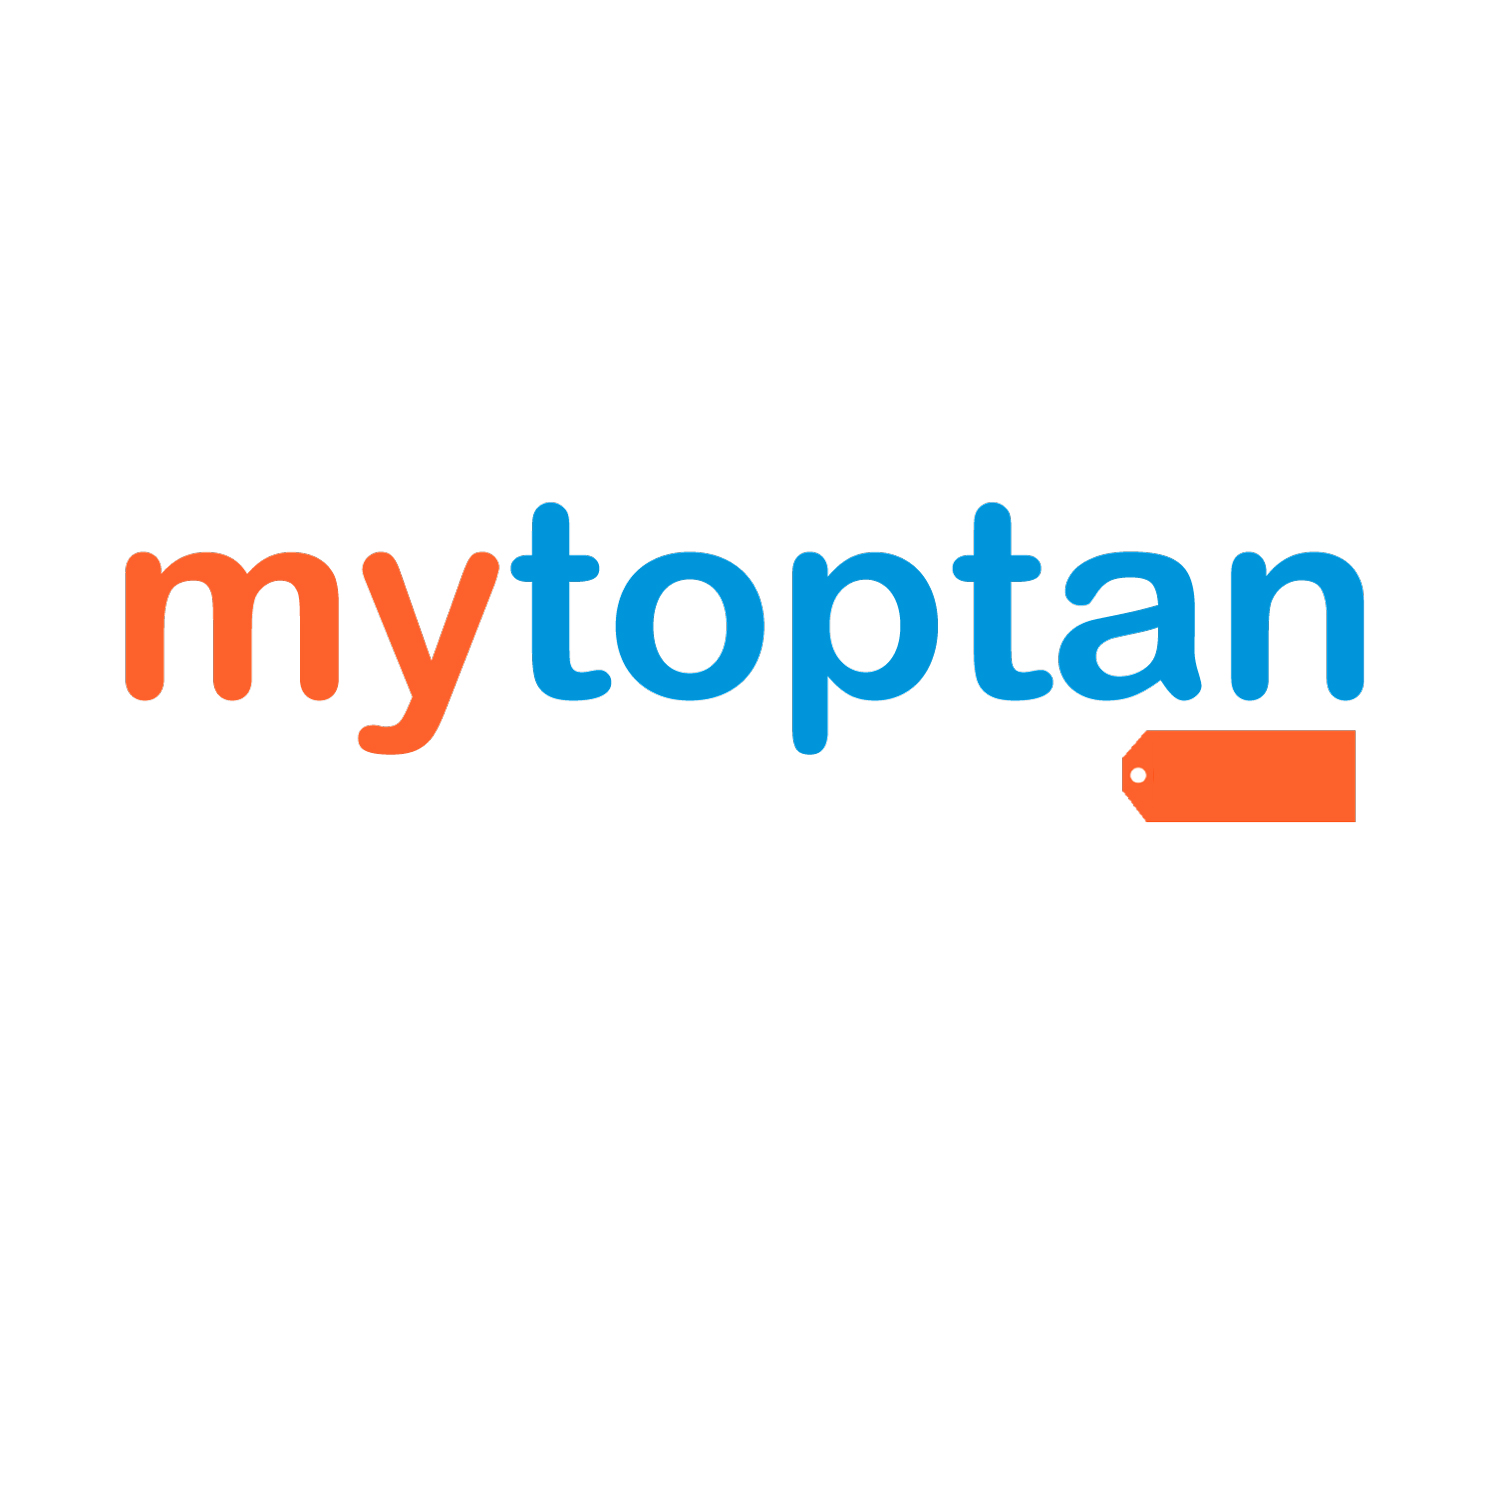 mytoptan